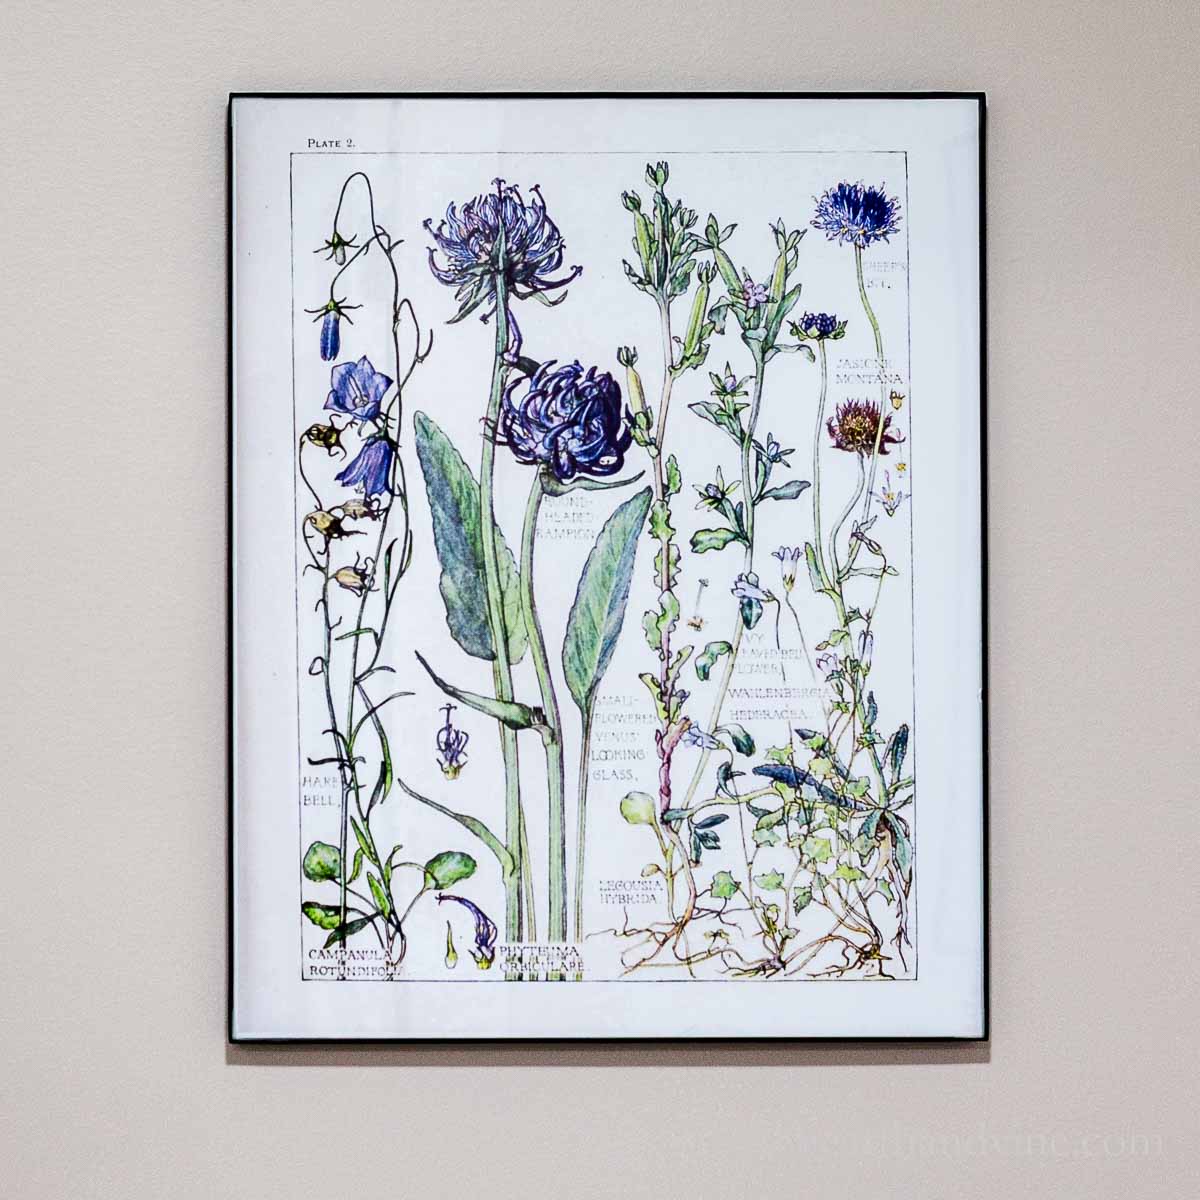 Framed botanical print of bellflowers result from DIY botanical wall art project.